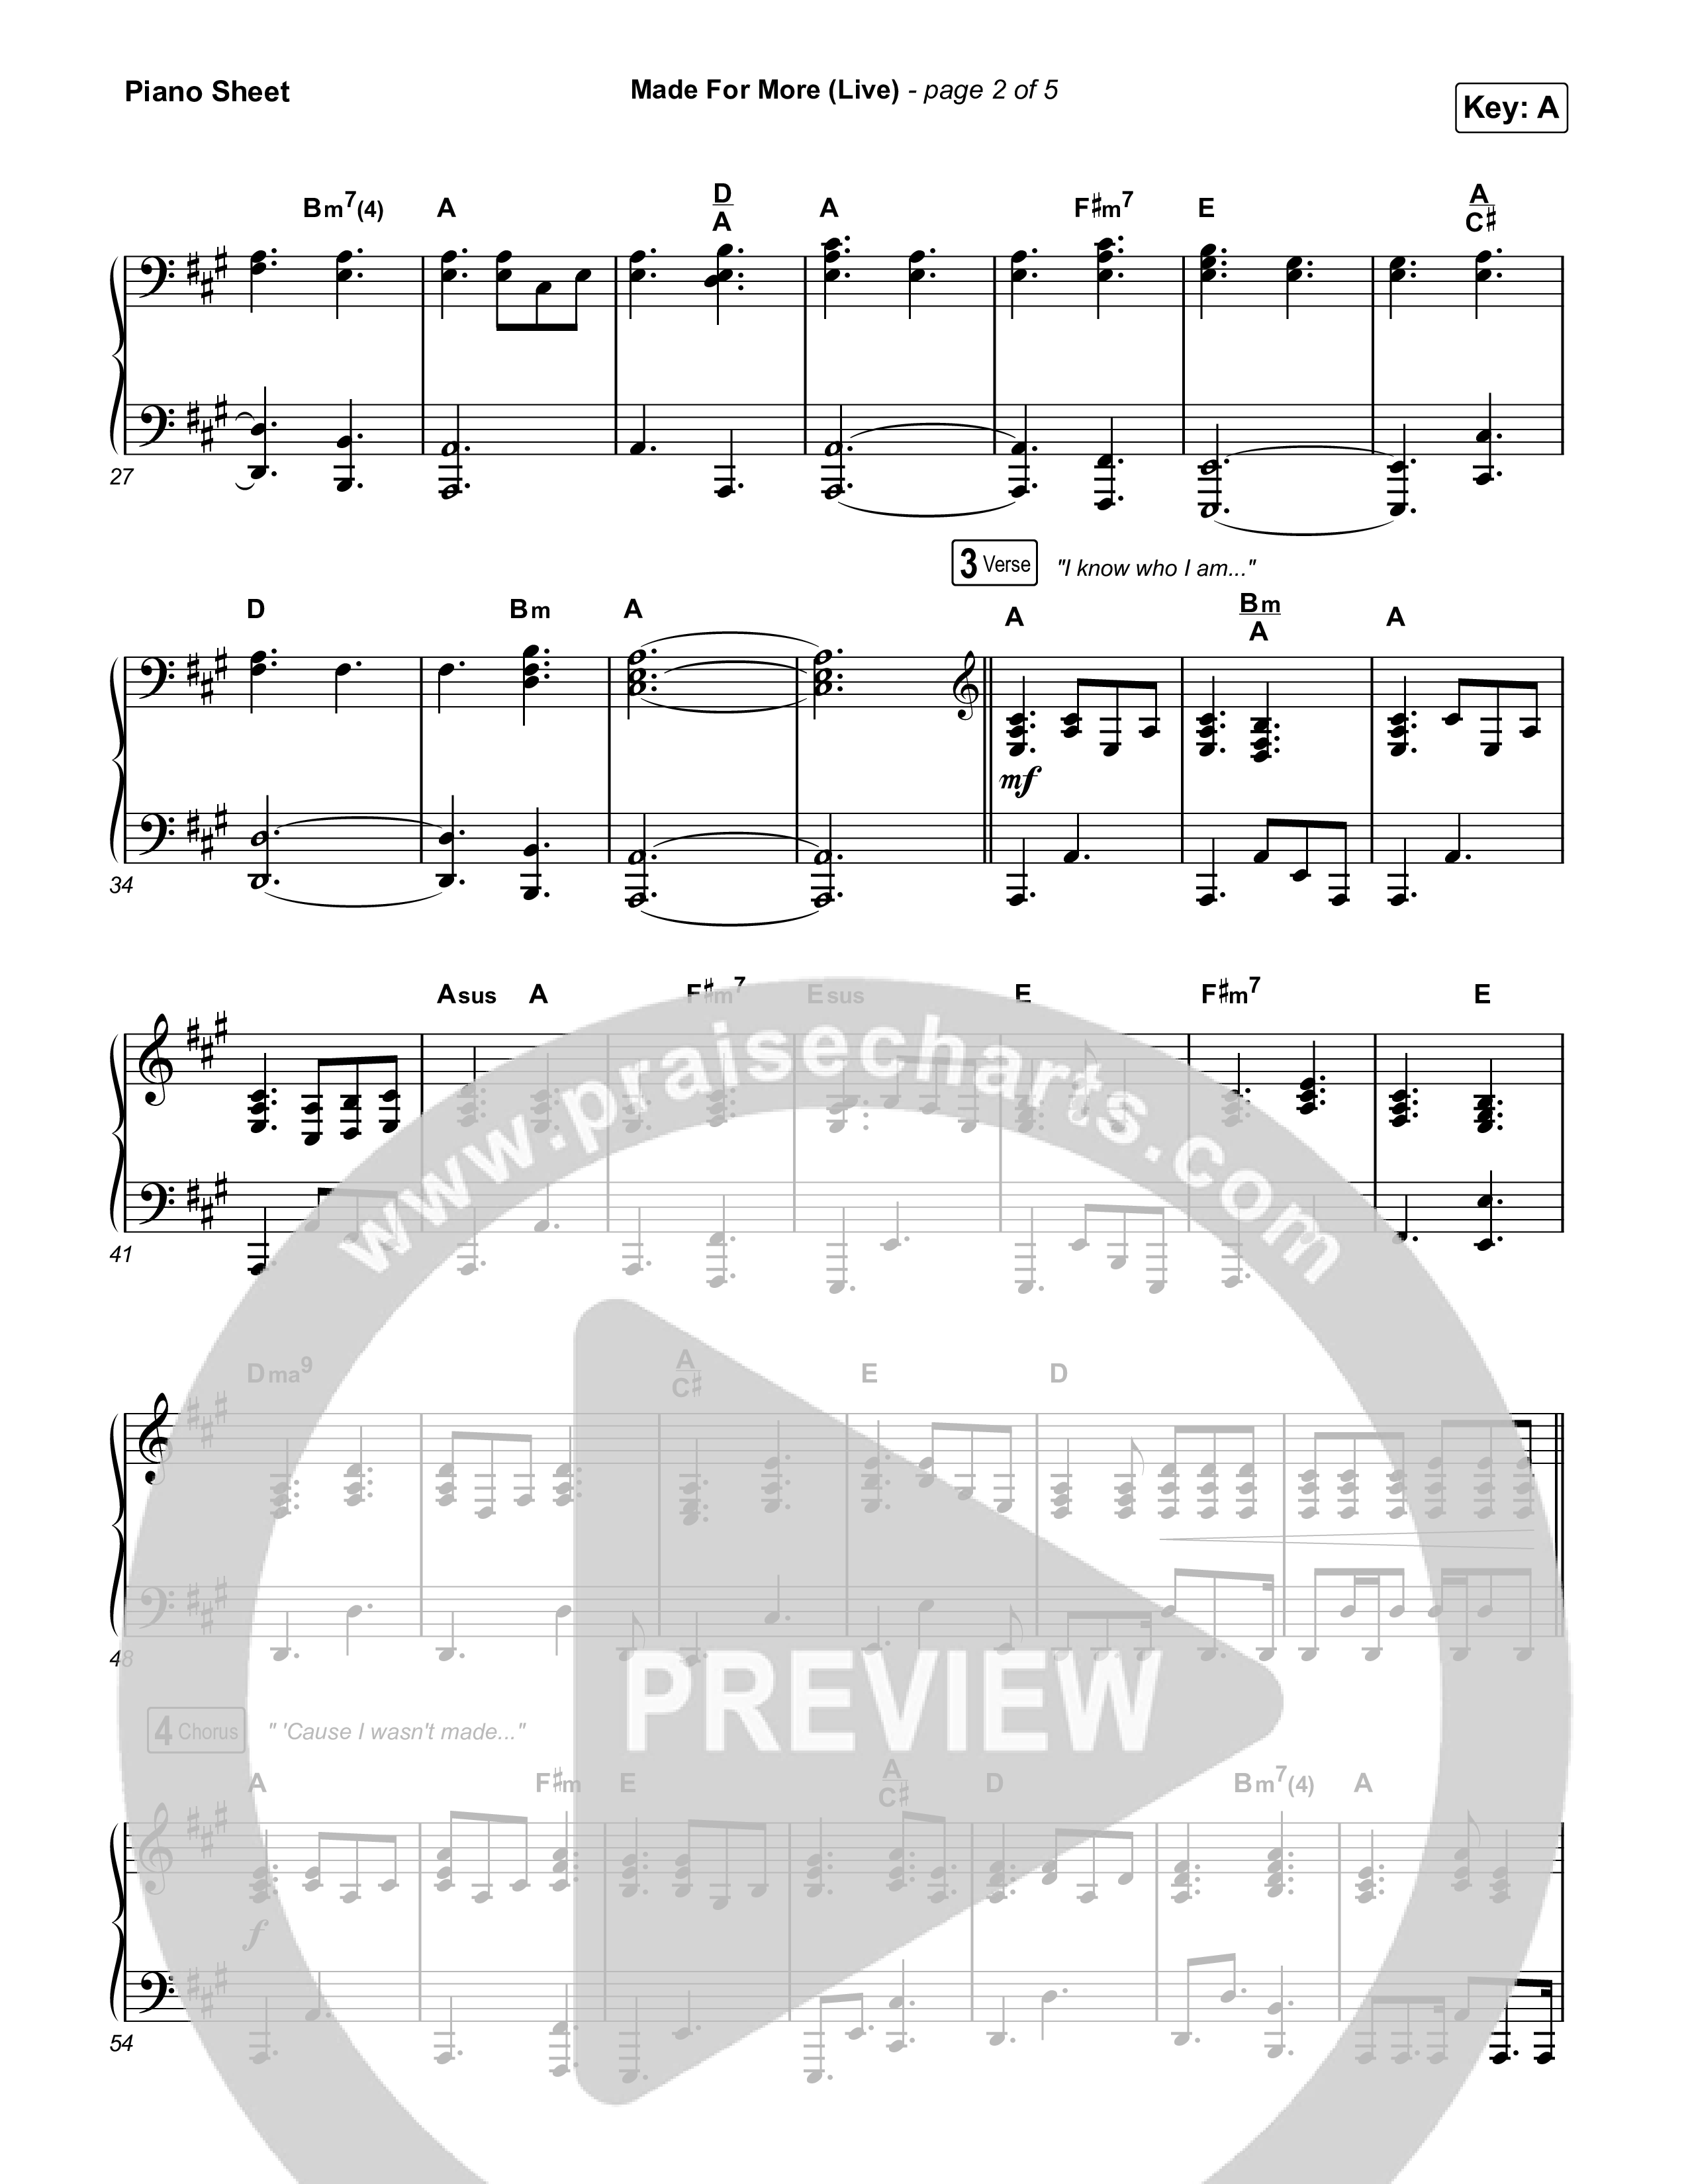 Made For More (Unison/2-Part) Piano Sheet (Josh Baldwin / Jenn Johnson / Arr. Luke Gambill)